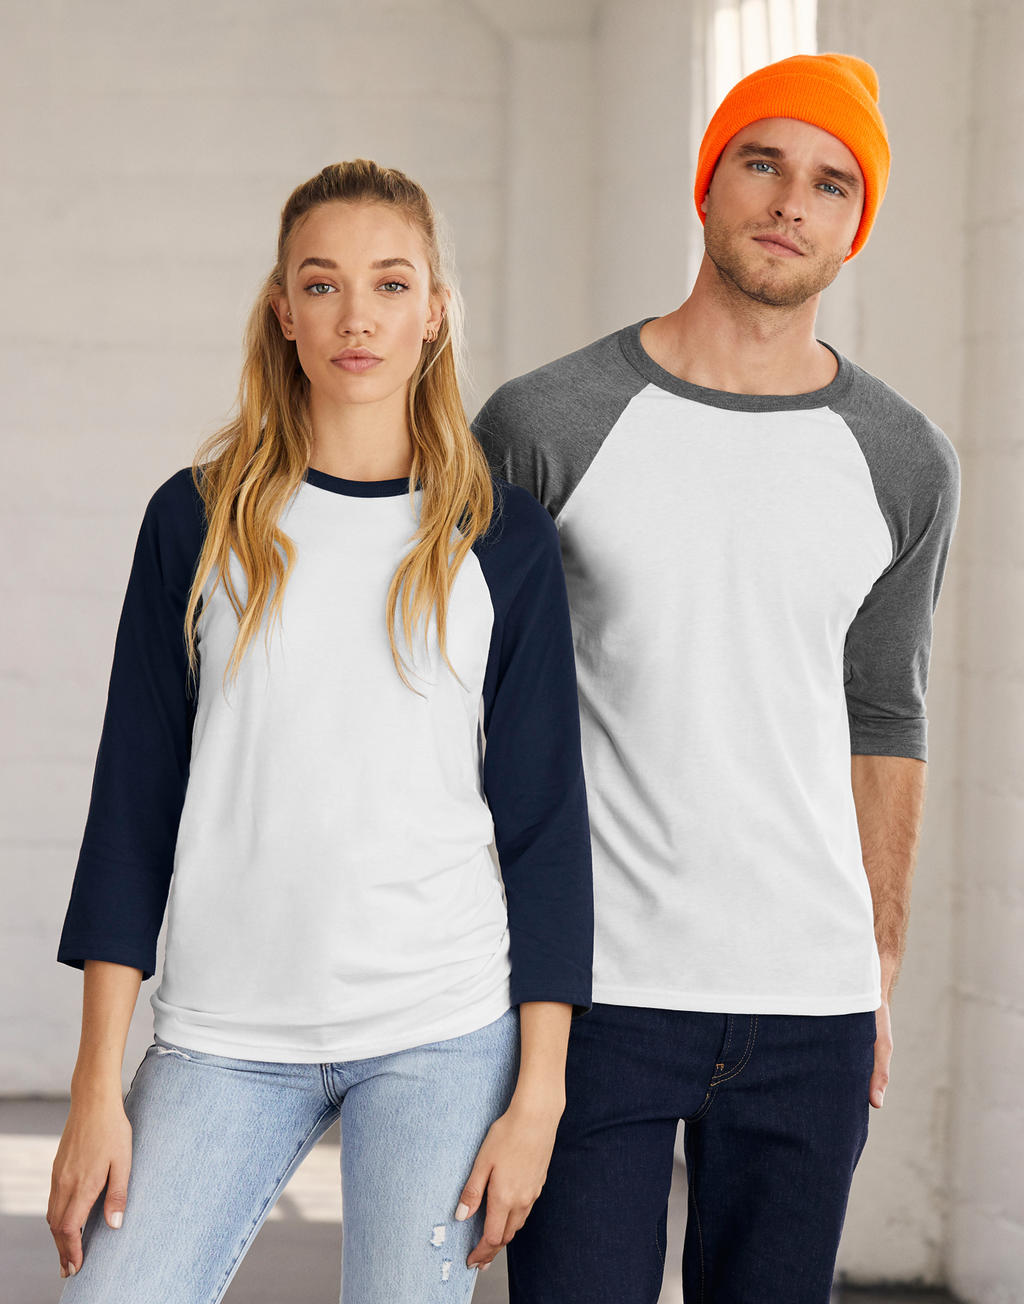  Unisex 3/4 Sleeve Baseball T-Shirt in Farbe White/Dark Grey